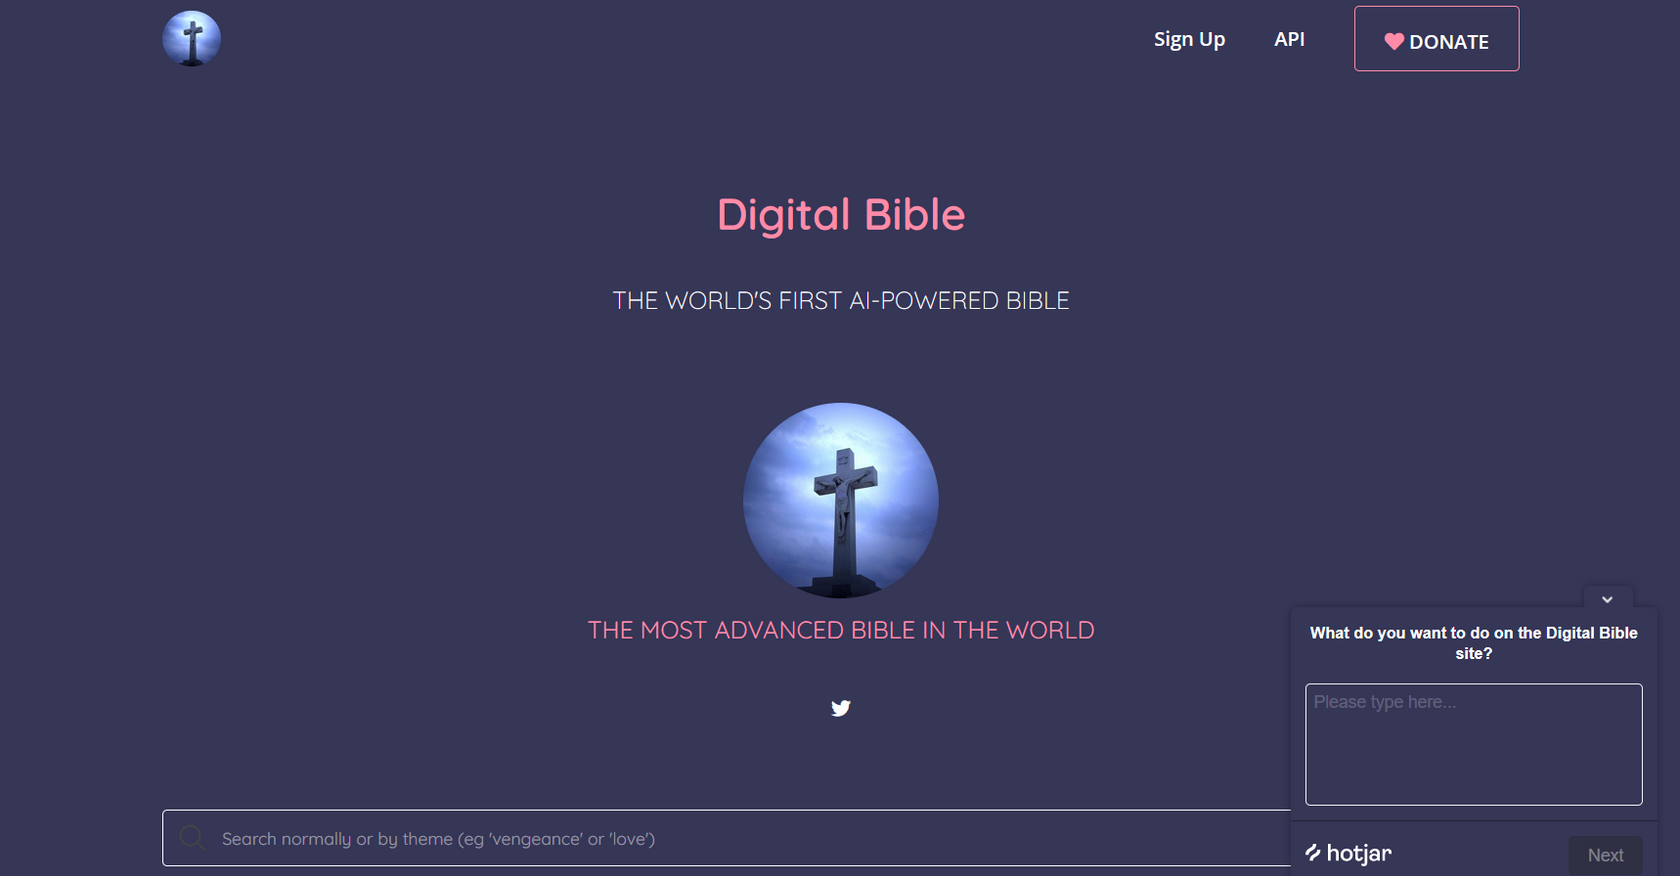 ThemotherAI - Digital Bible